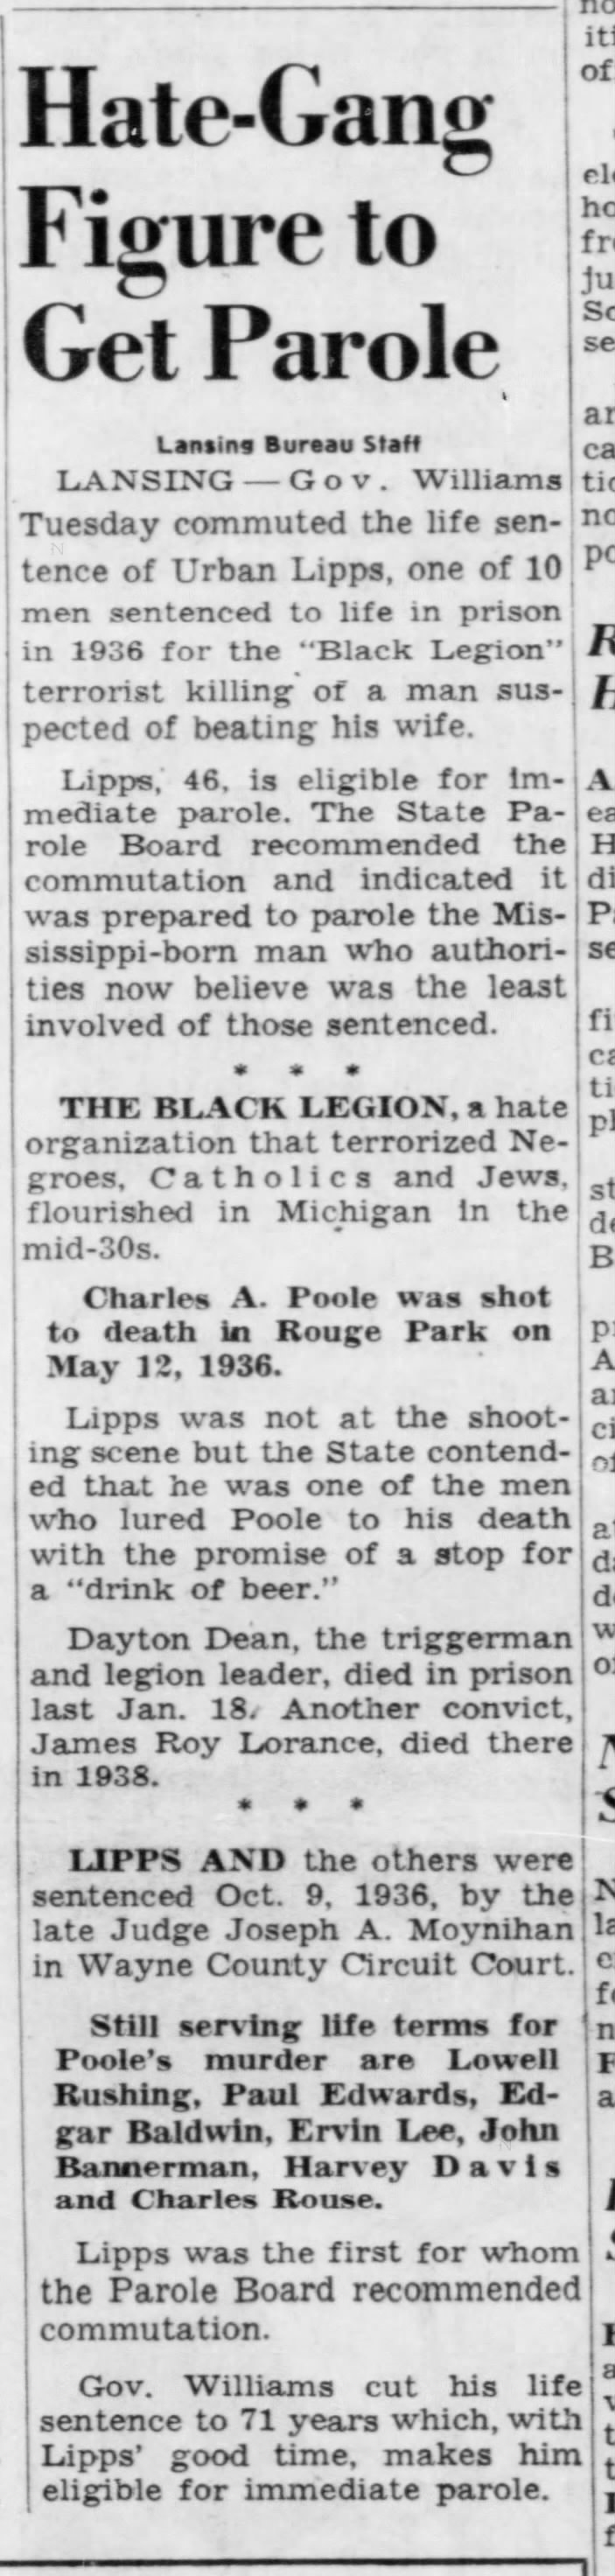 1960-06-01  Hate Gang Member Sentence Commuted from 1936 Rouge Park Murder    Det Free Press